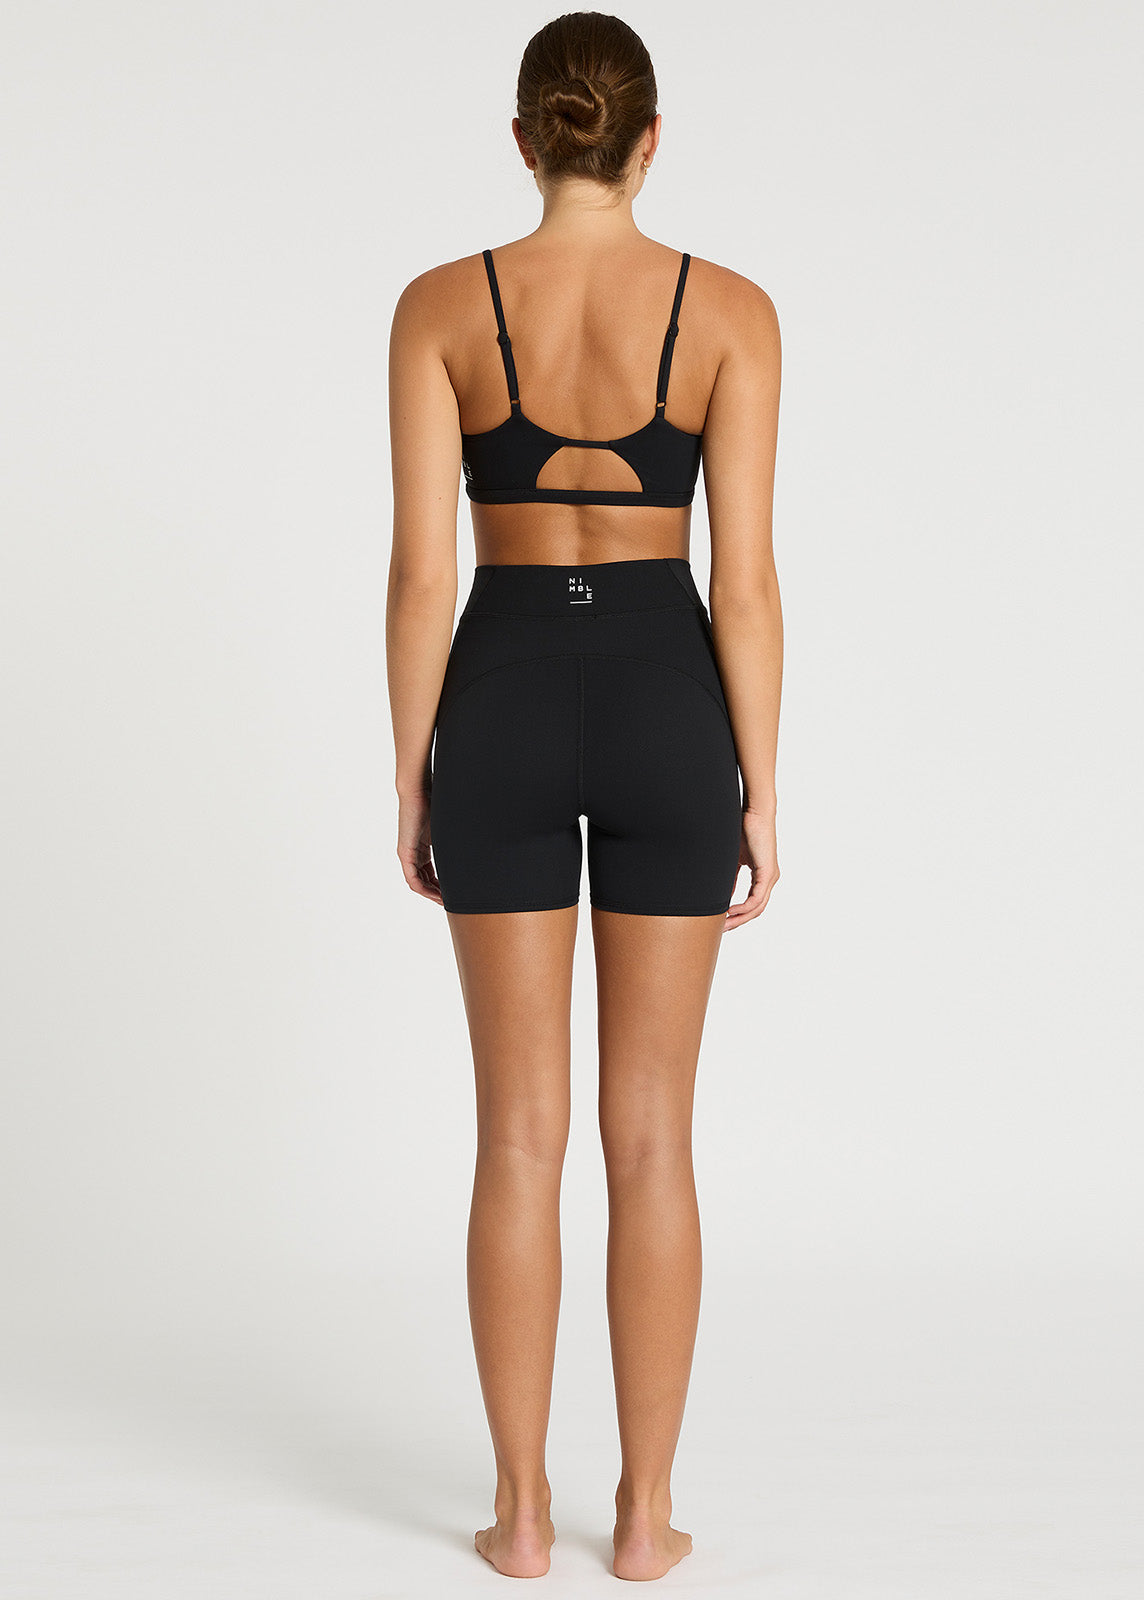 Model stood facing backwards wearing black bike shorts with V-waistband and white logo detail to the back.